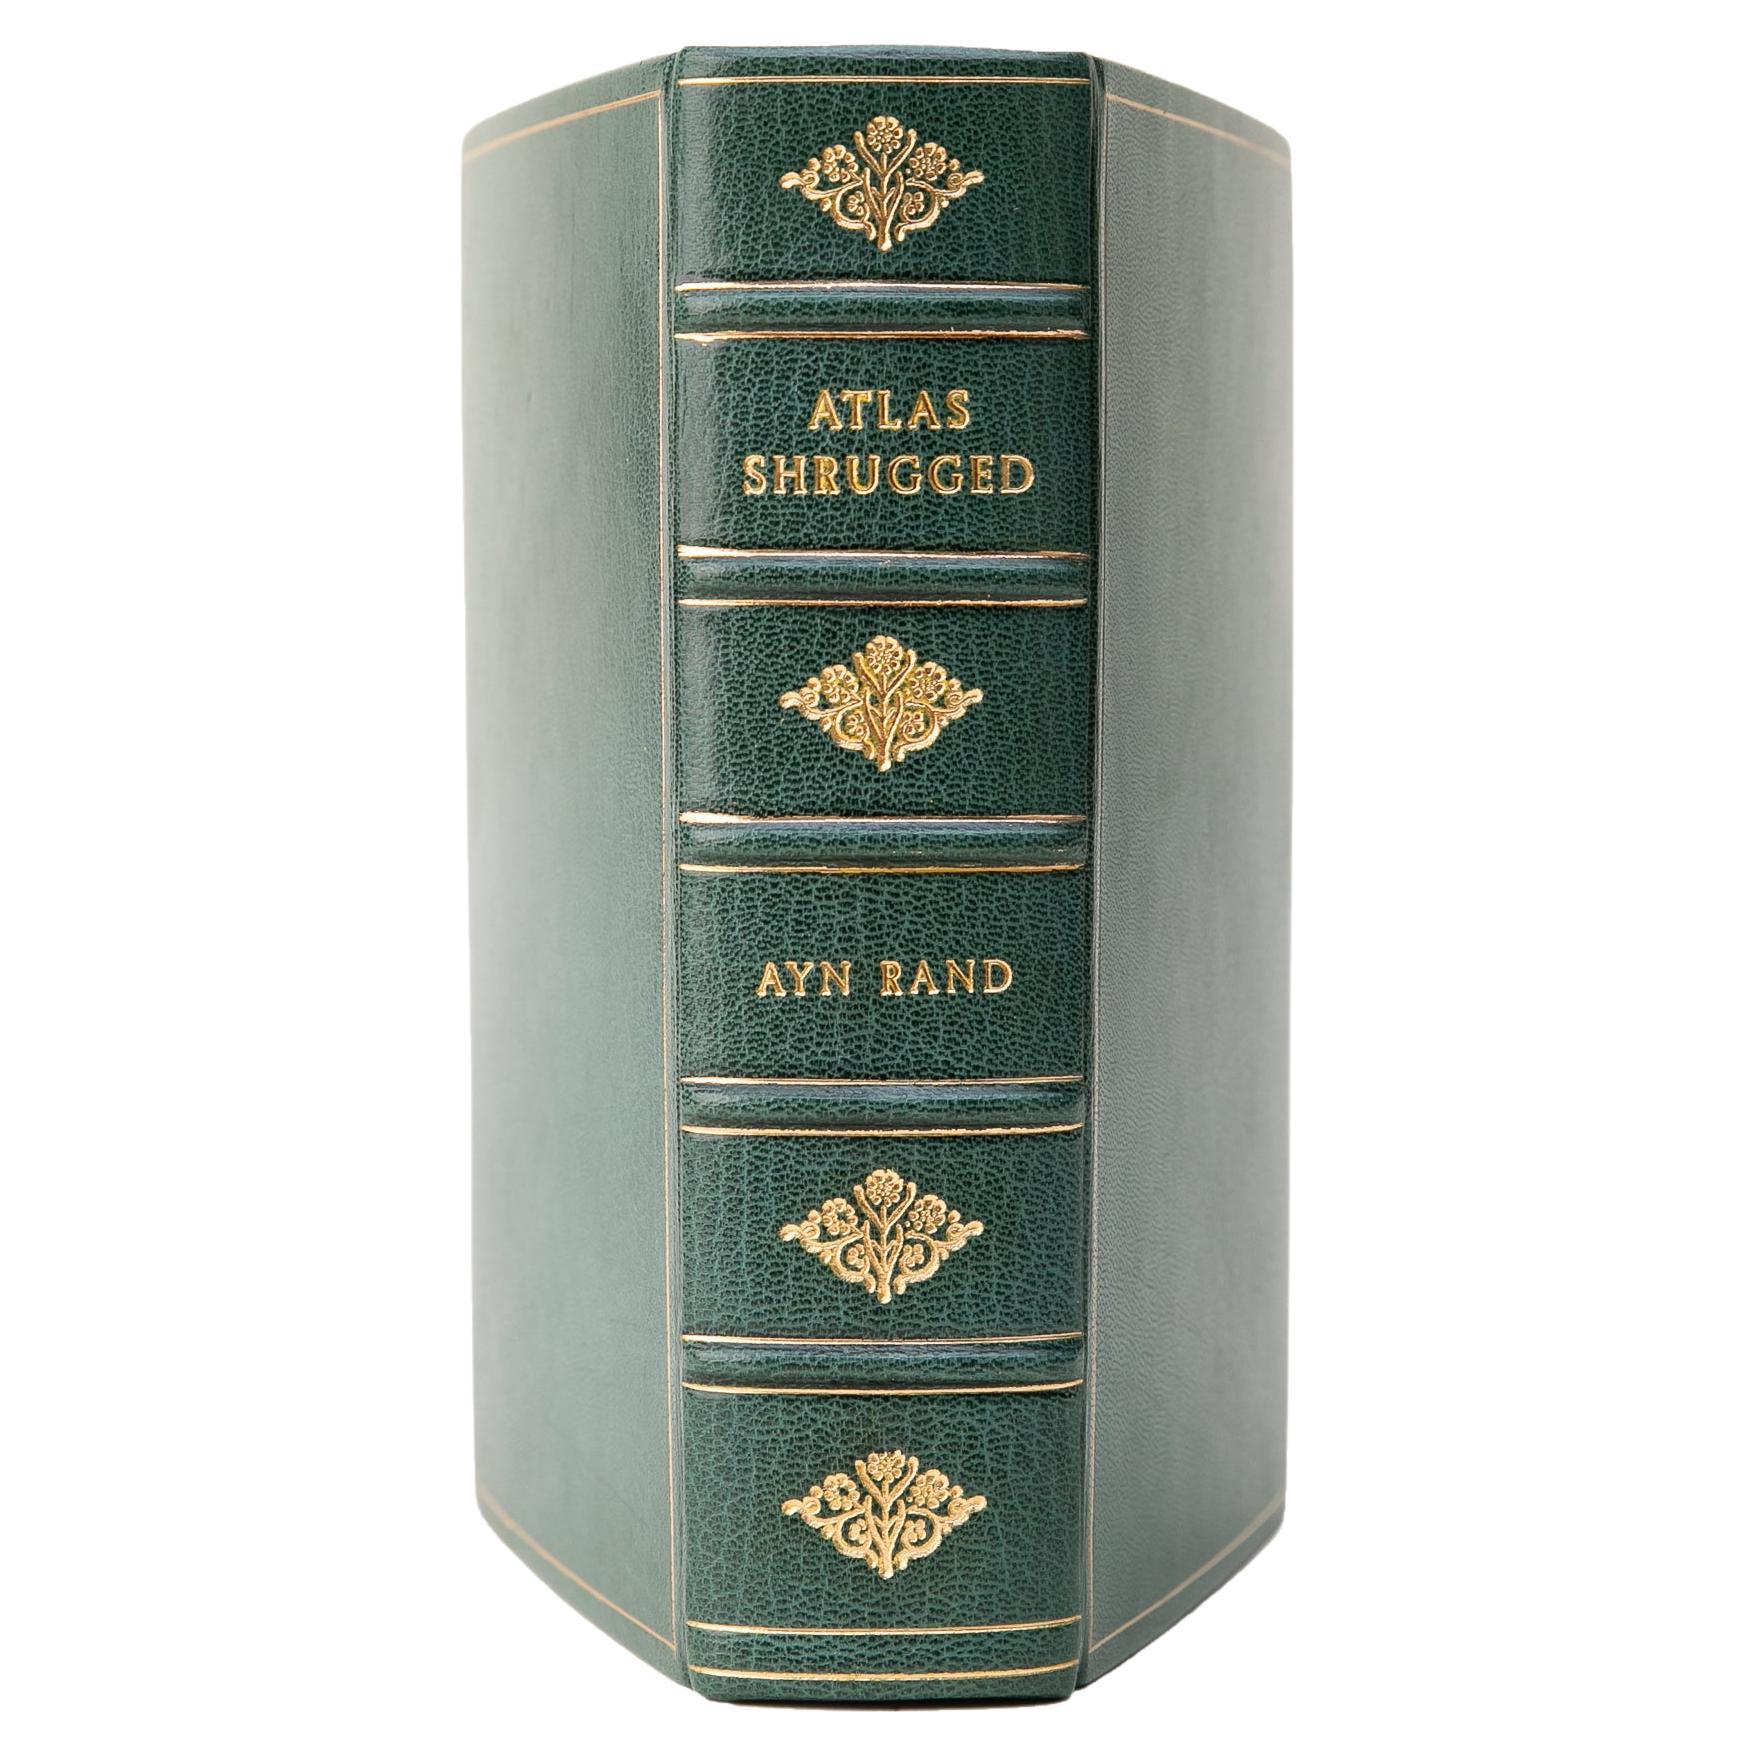 1 Volume. Ayn Rand, Atlas Shrugged.